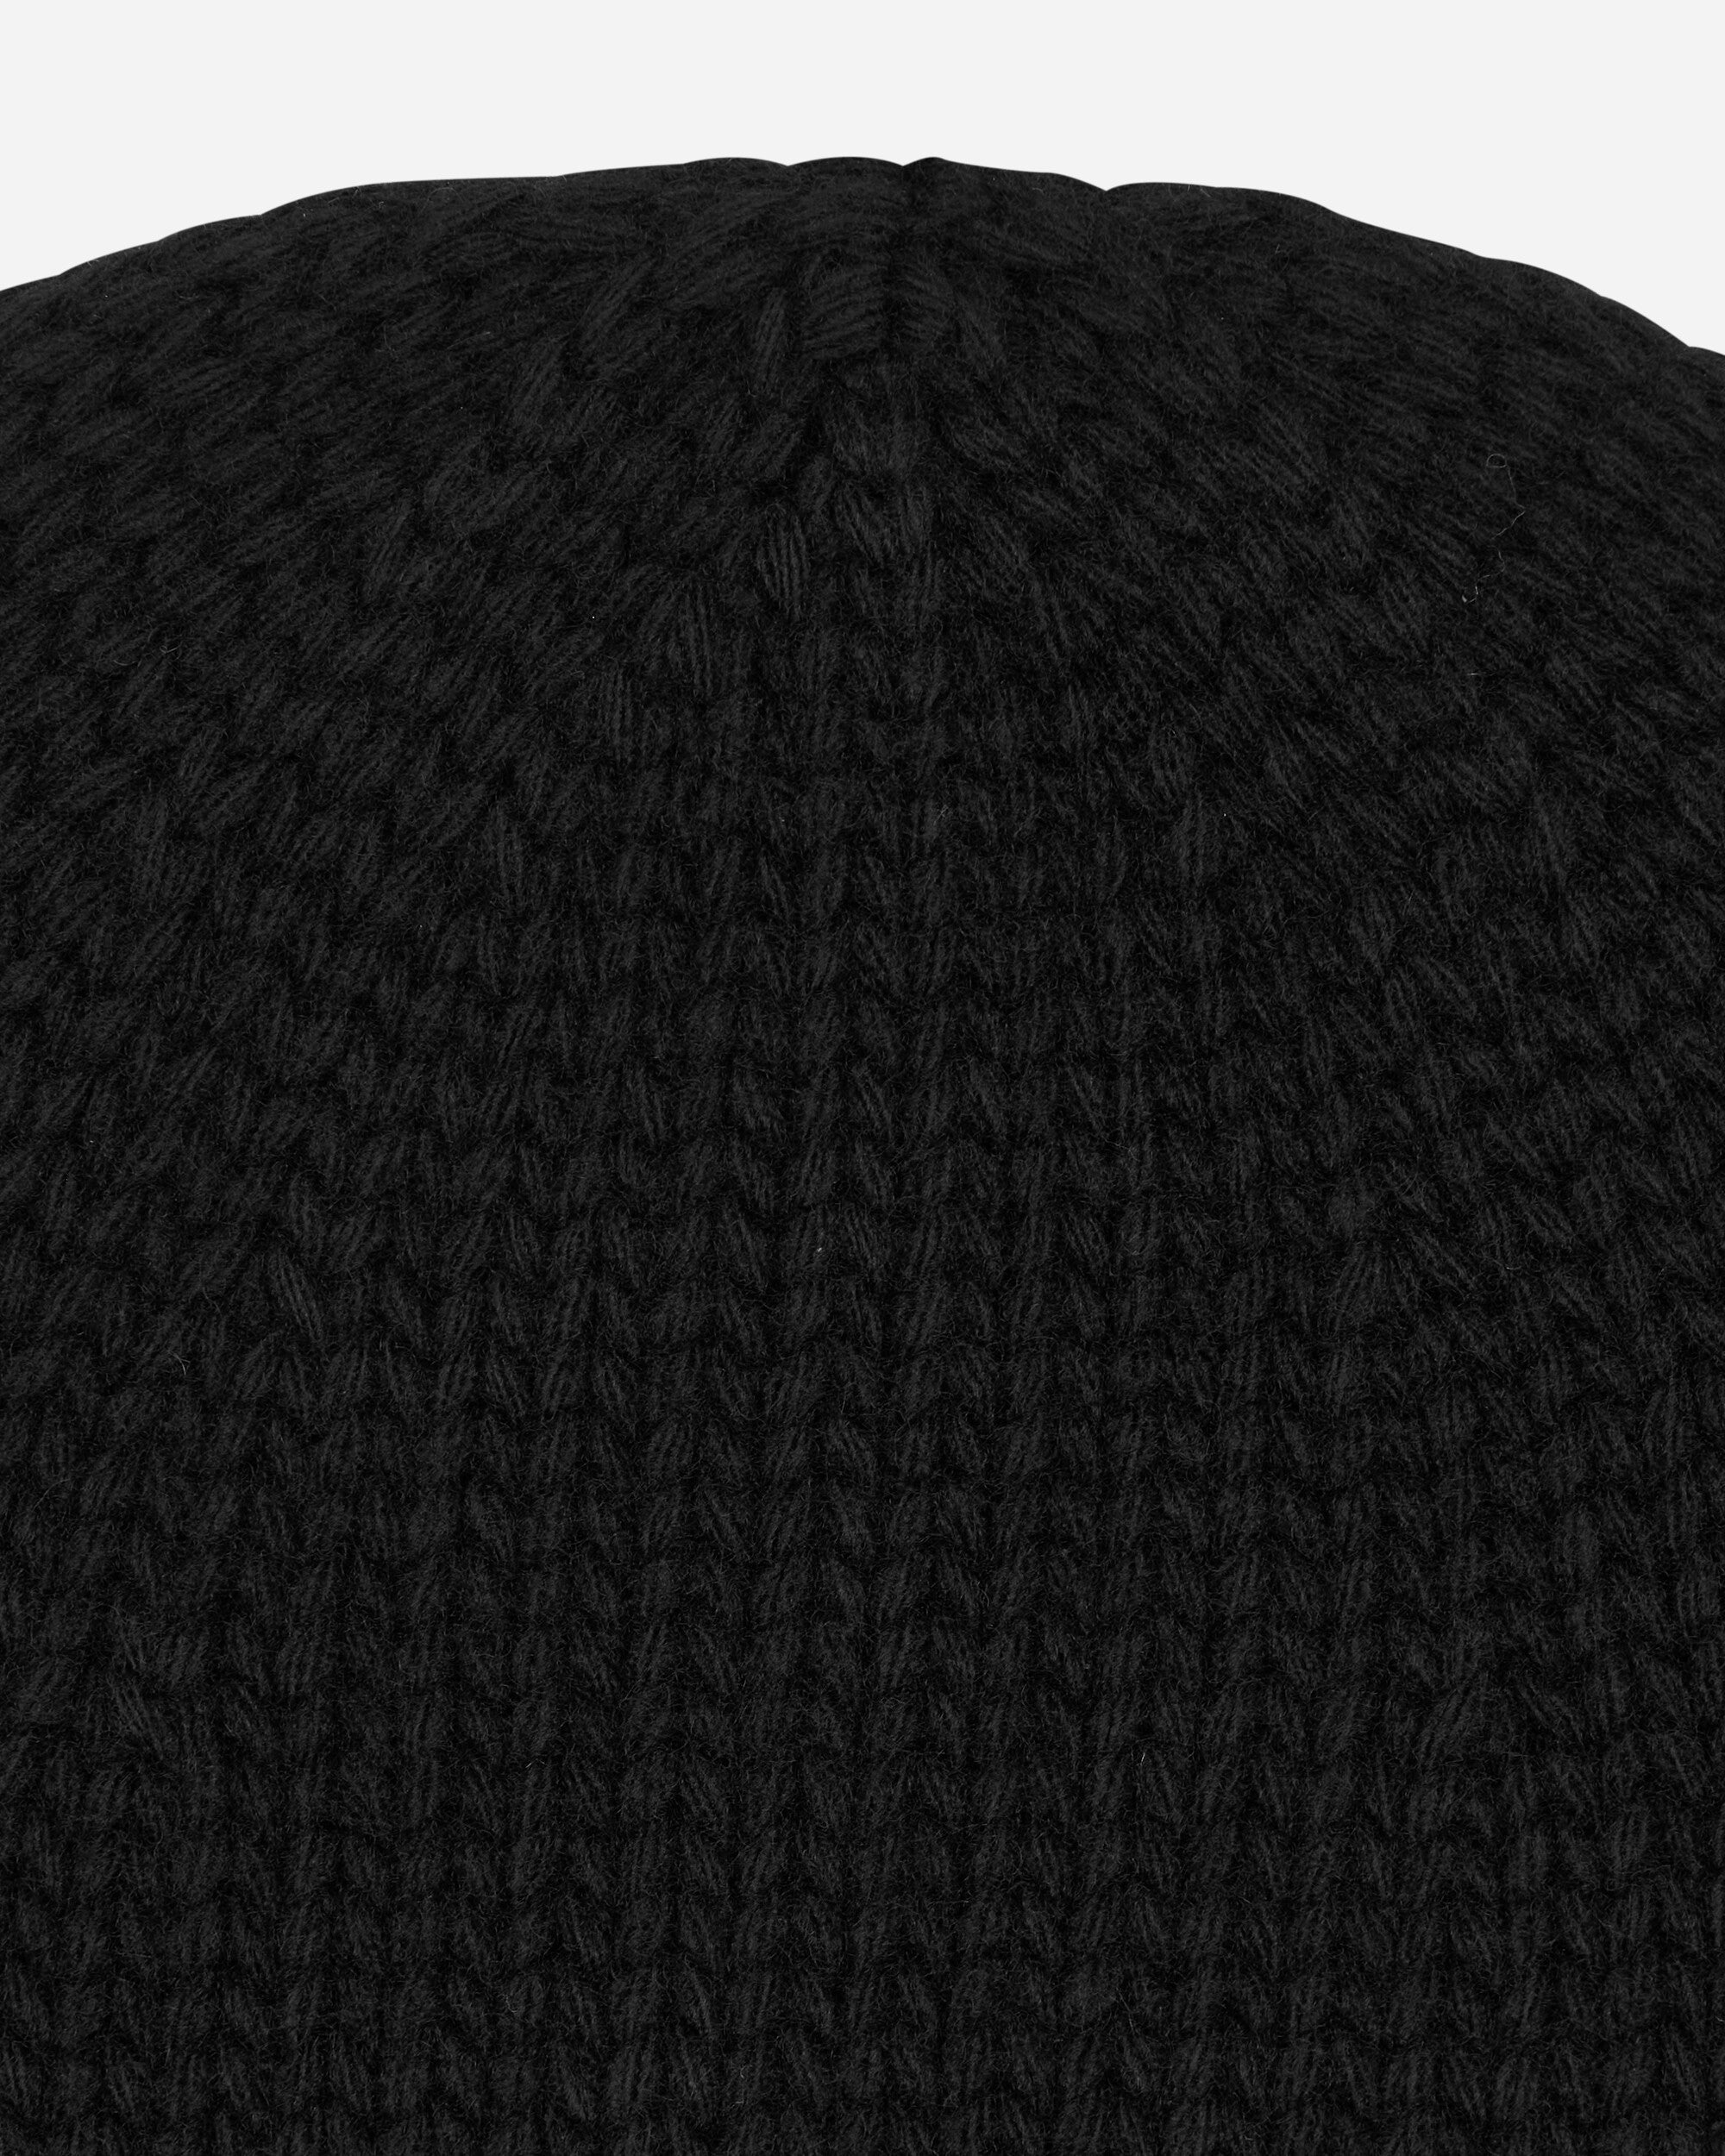 Stone Island Cap Black Hats Caps 7915N17D6 V0029